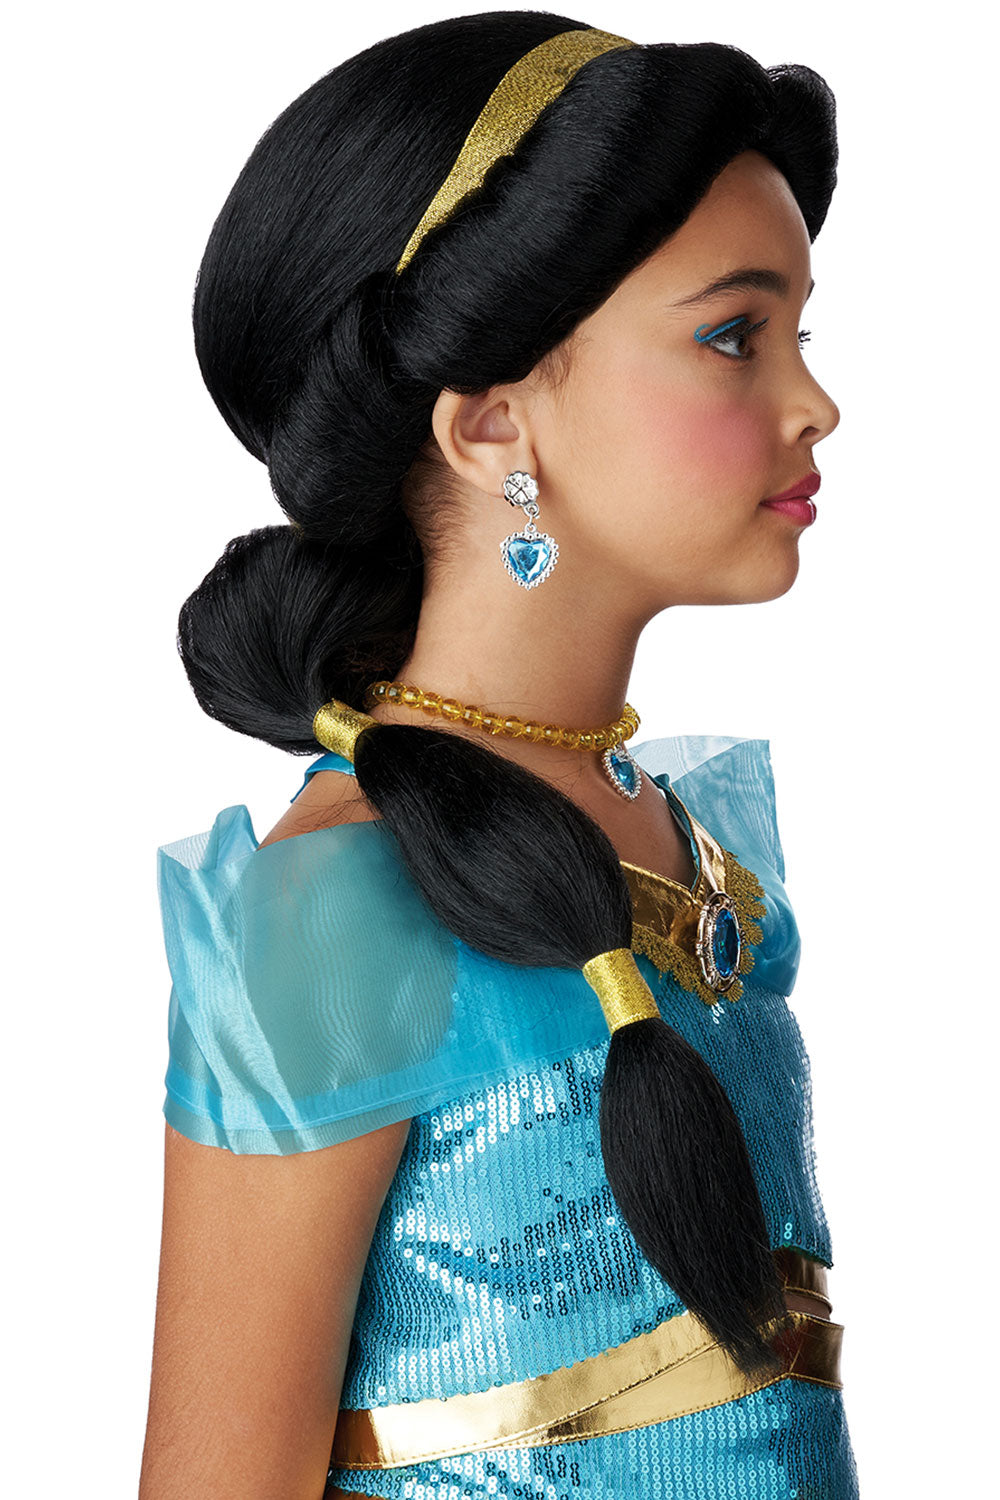 Arabian Princess Child Wig California Costume 7021-156